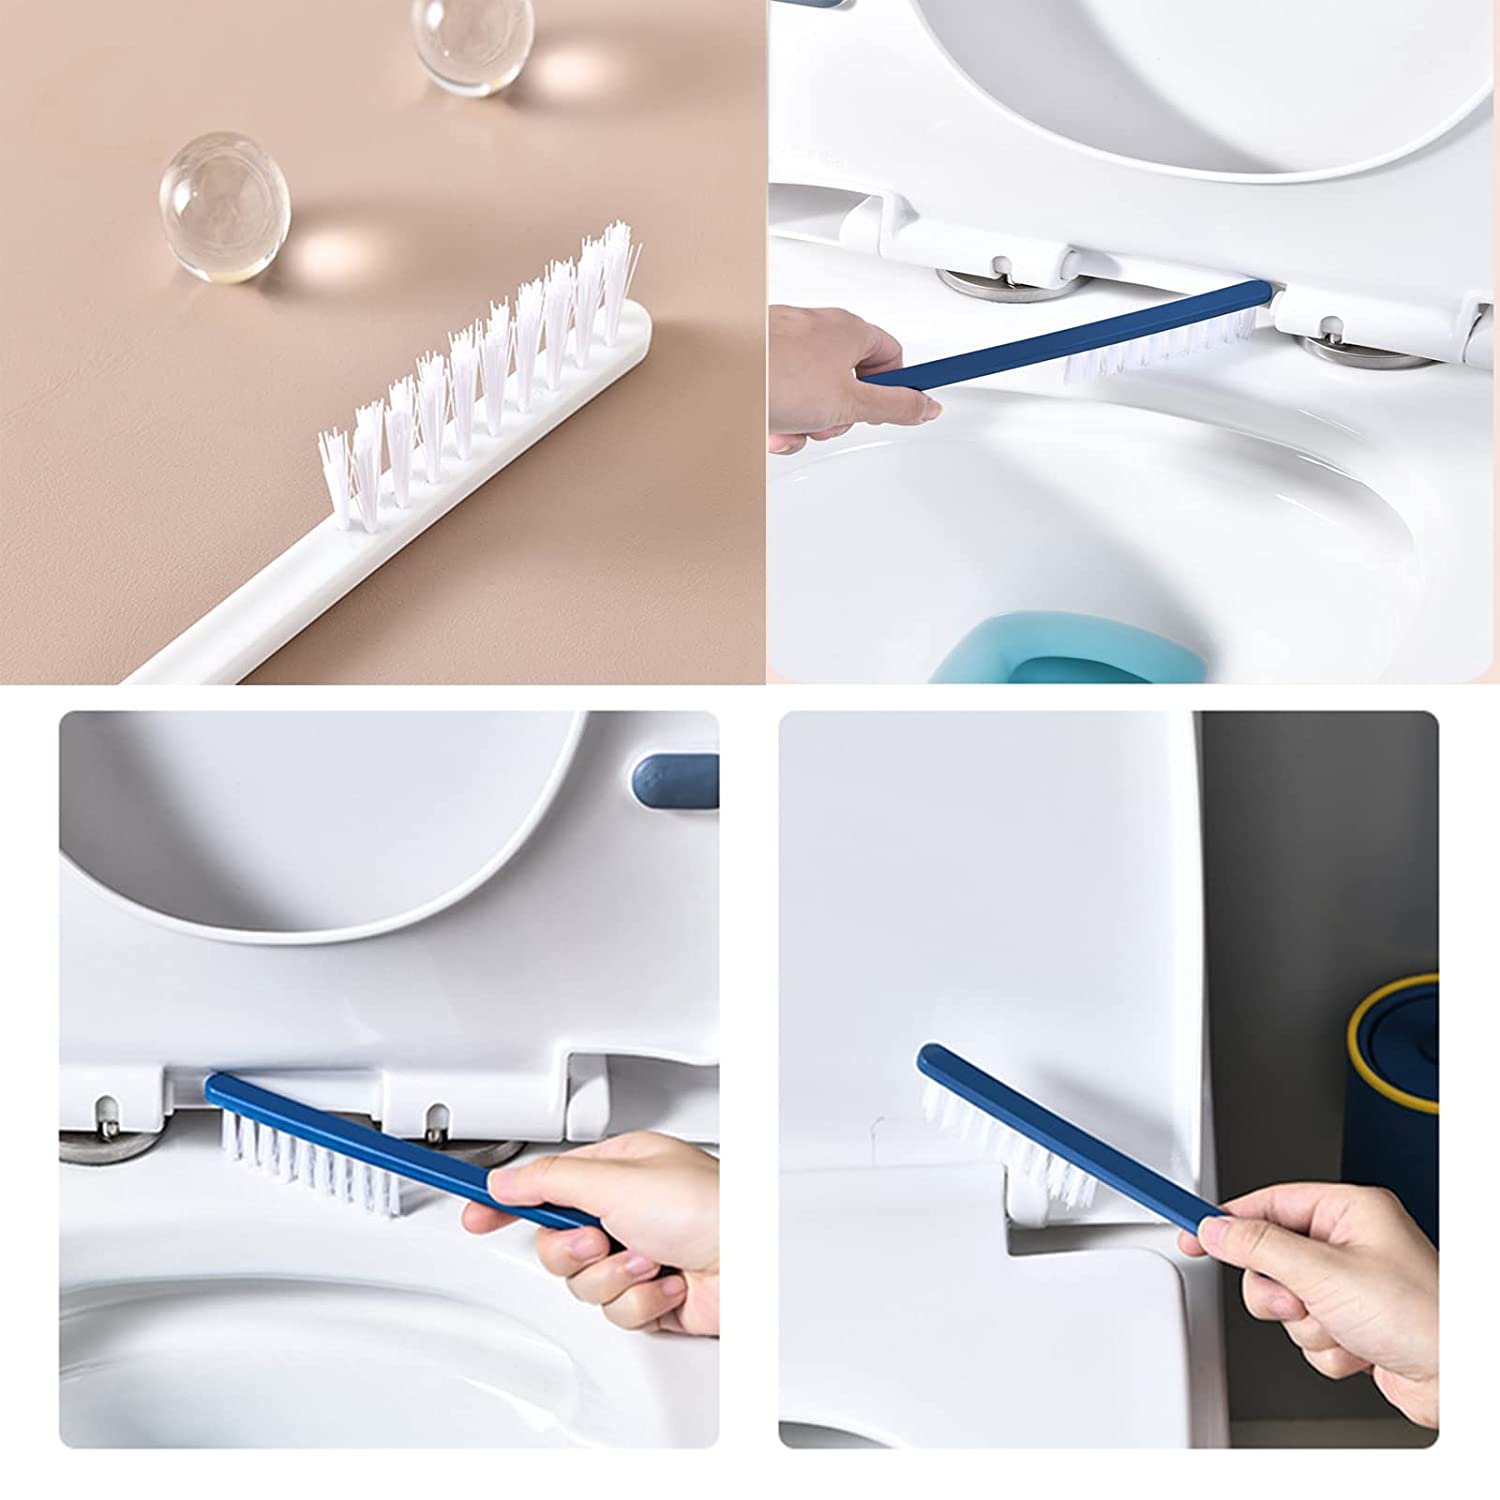 7683 Toilet Brush Set , Toilet Brush And Holder Set, Anti-Slip Handle Silicone Toilet Brush And Small Cleaning Brush , 